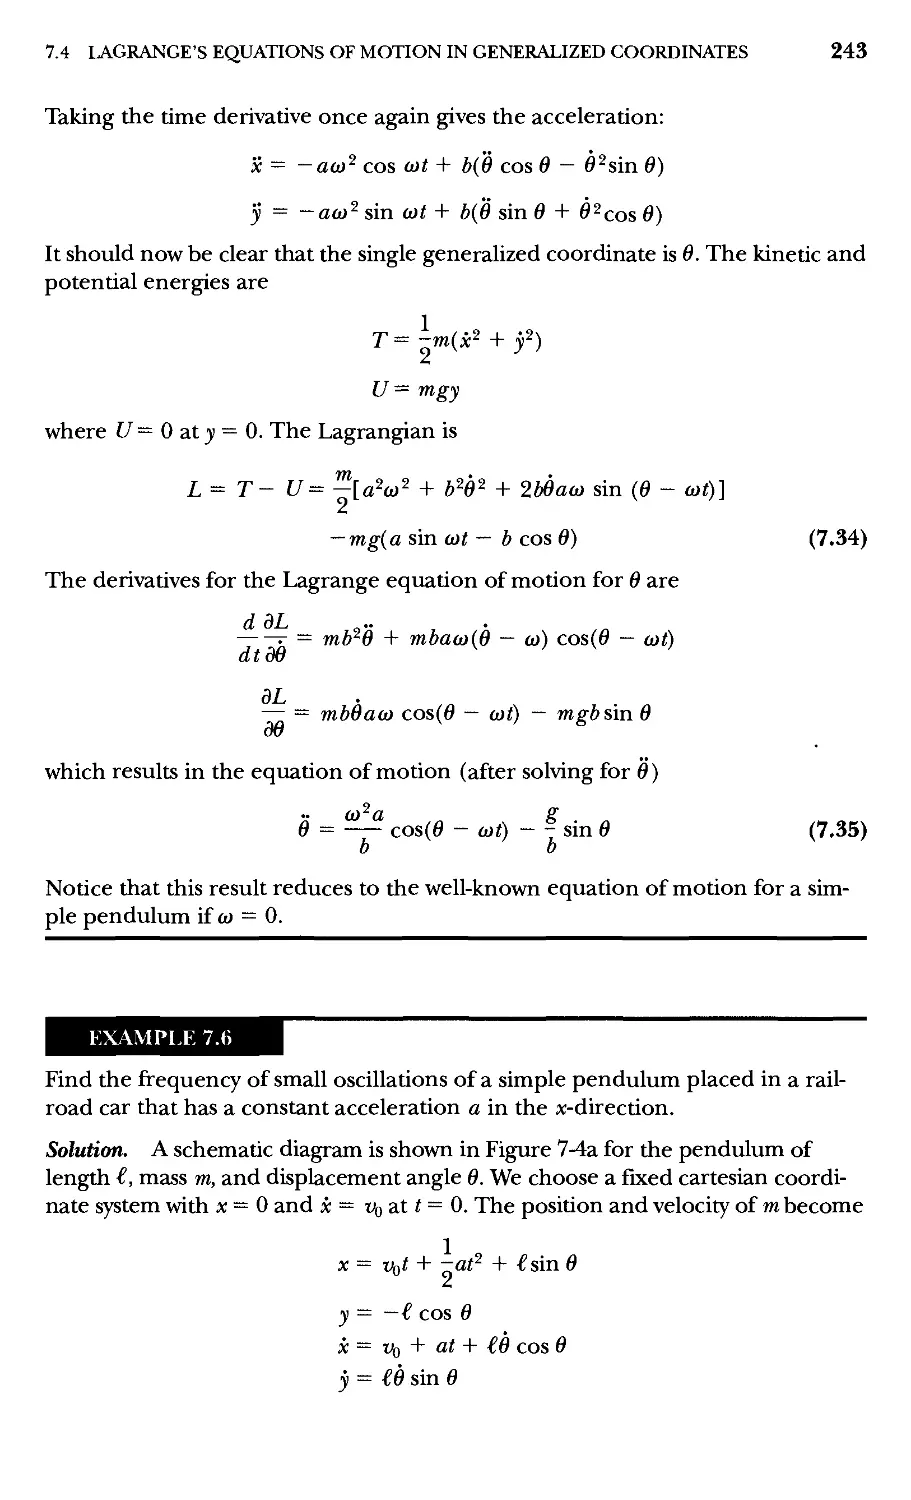 7.7 Essence of Lagrangian Dynamics